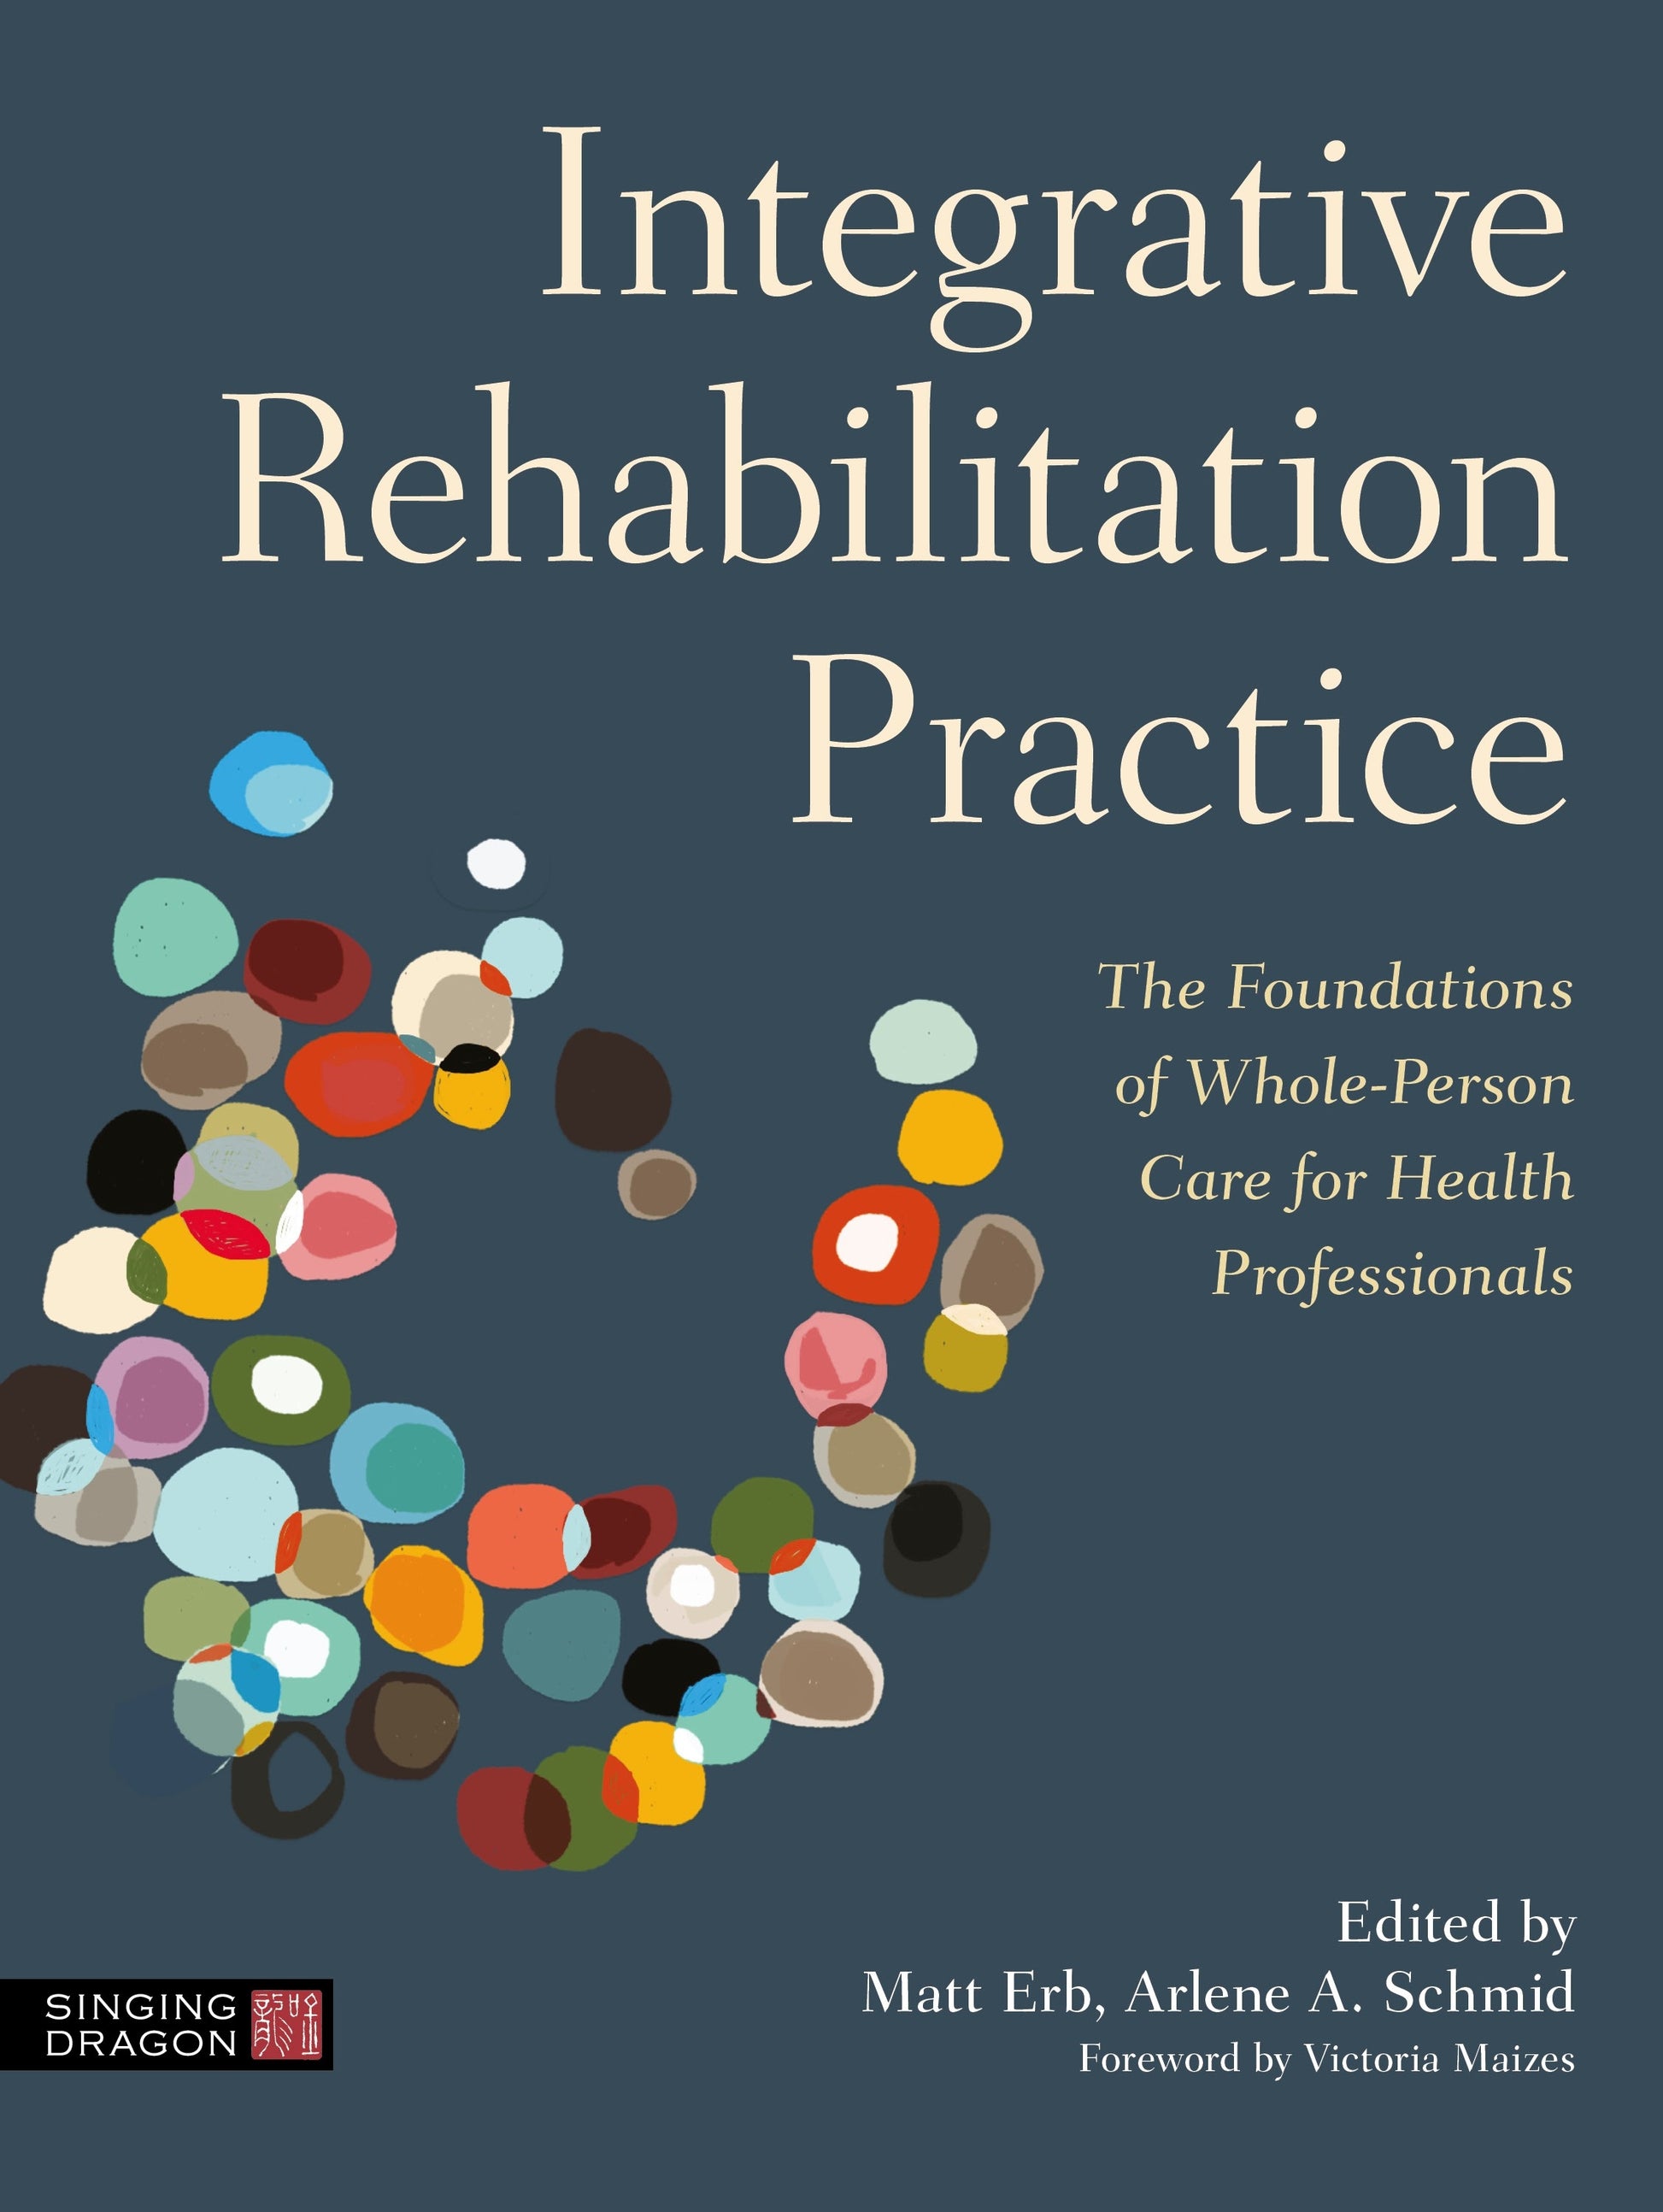 Integrative Rehabilitation Practice by Arlene A. Schmid, Matt Erb, No Author Listed